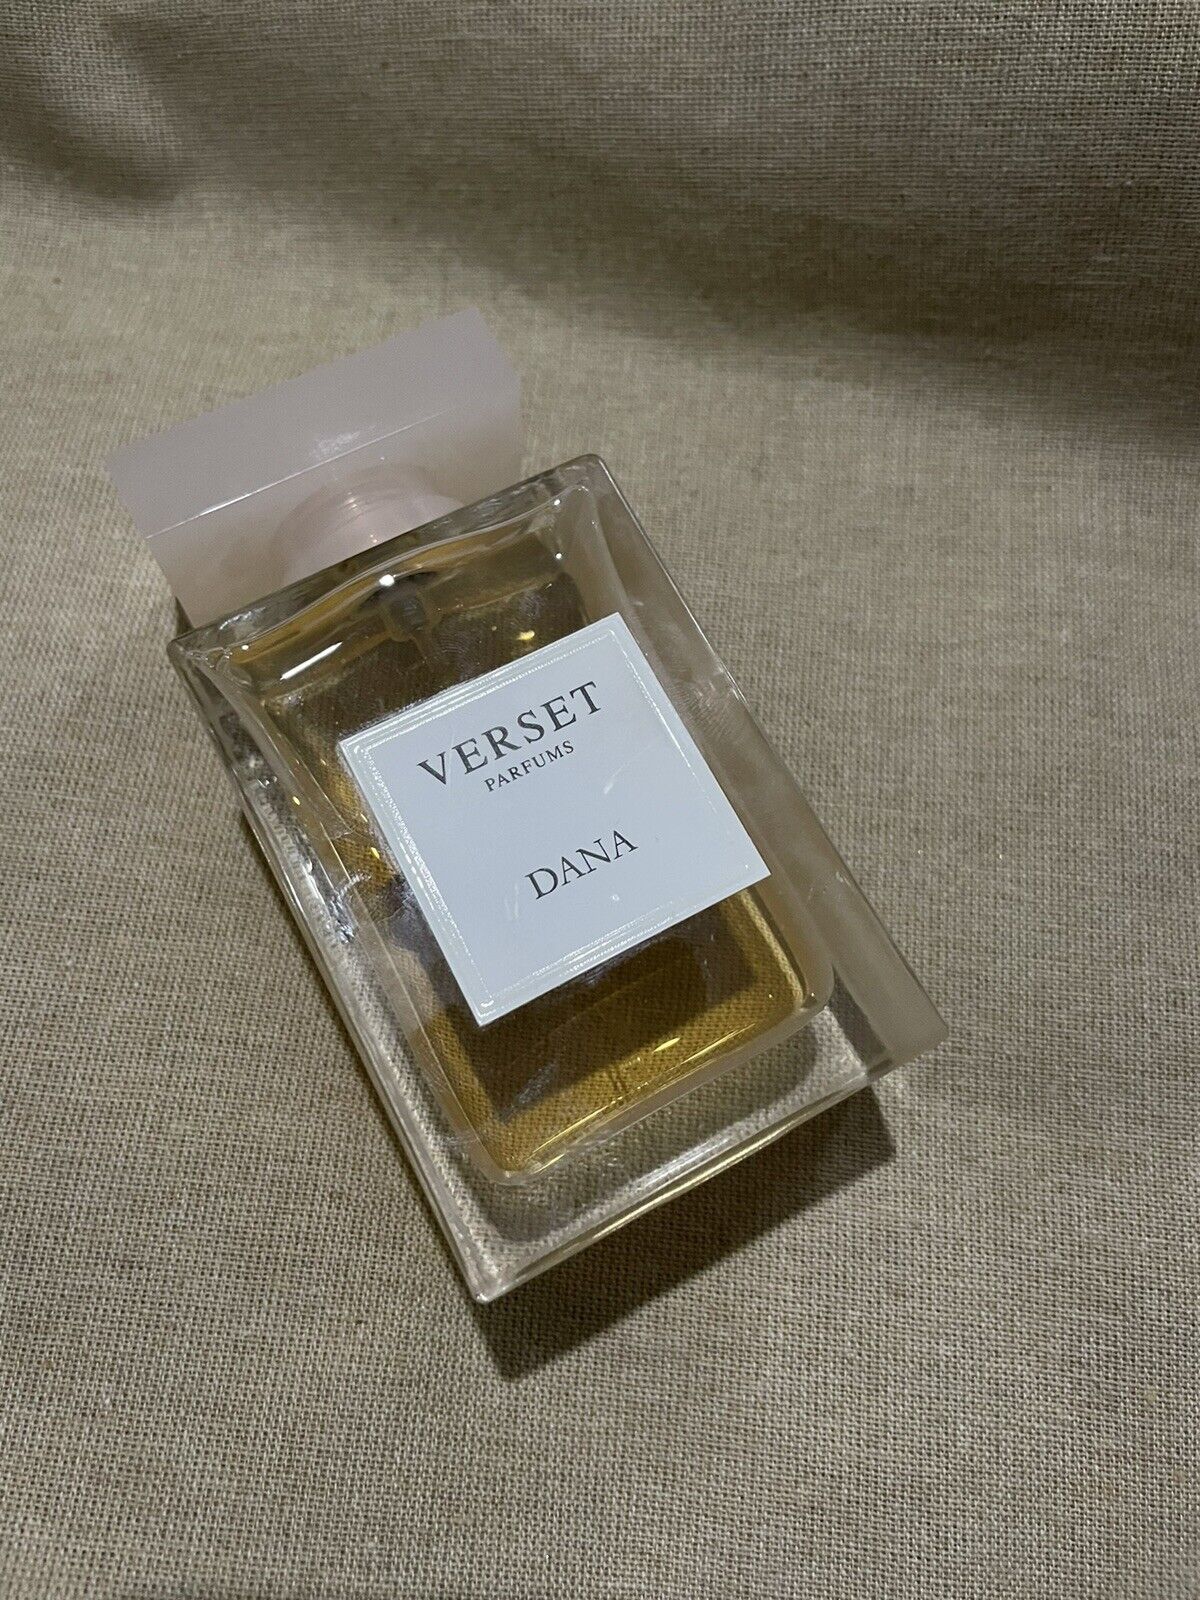 dana-by-verset-parfums